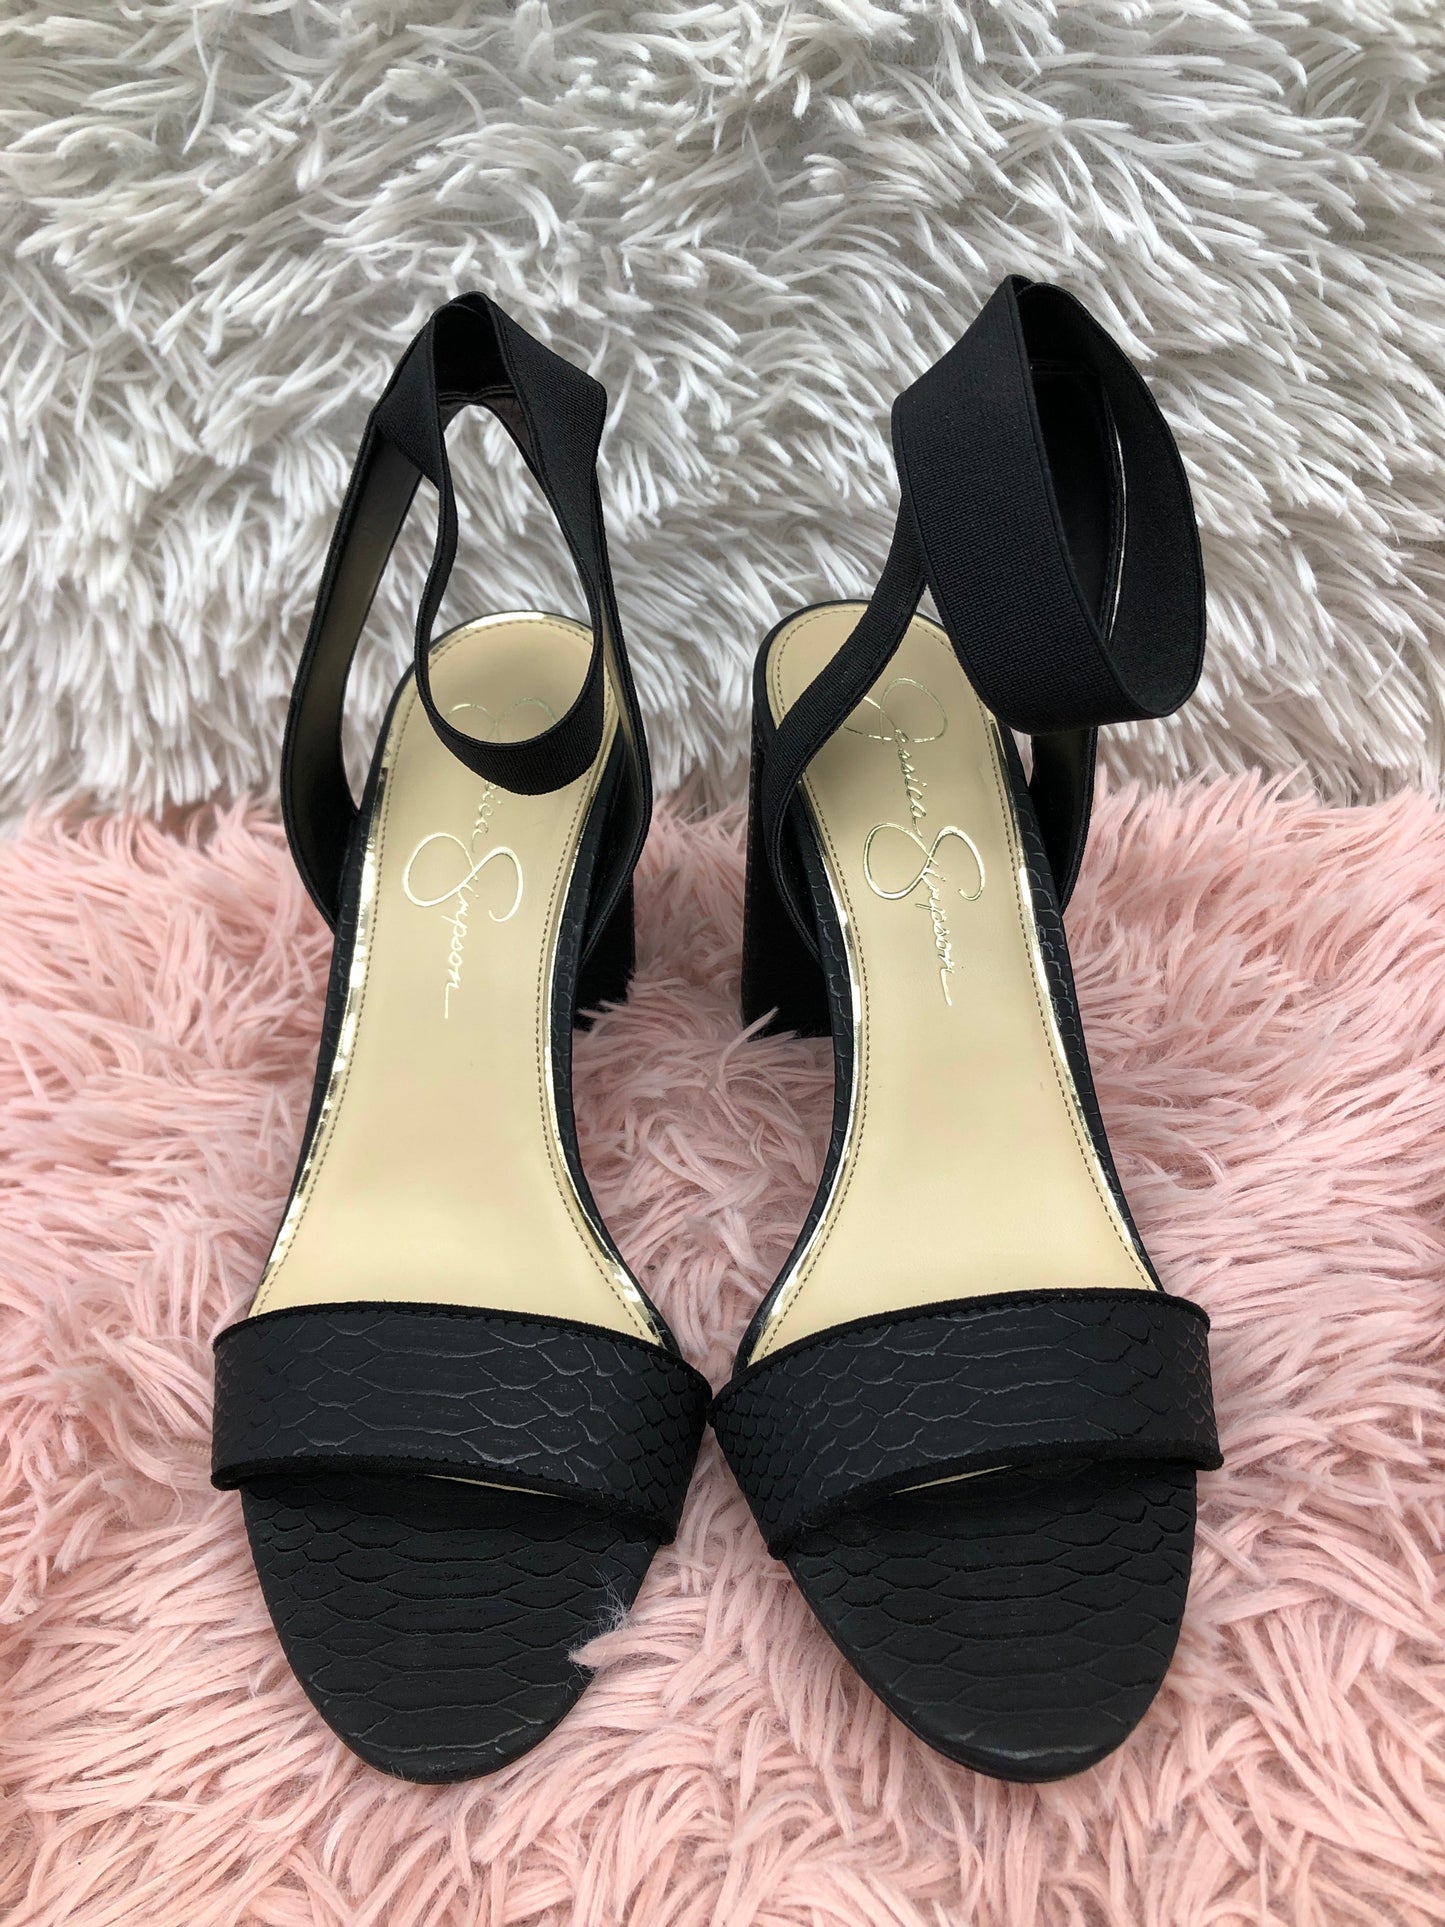 Black Shoes Heels Block Jessica Simpson, Size 8.5